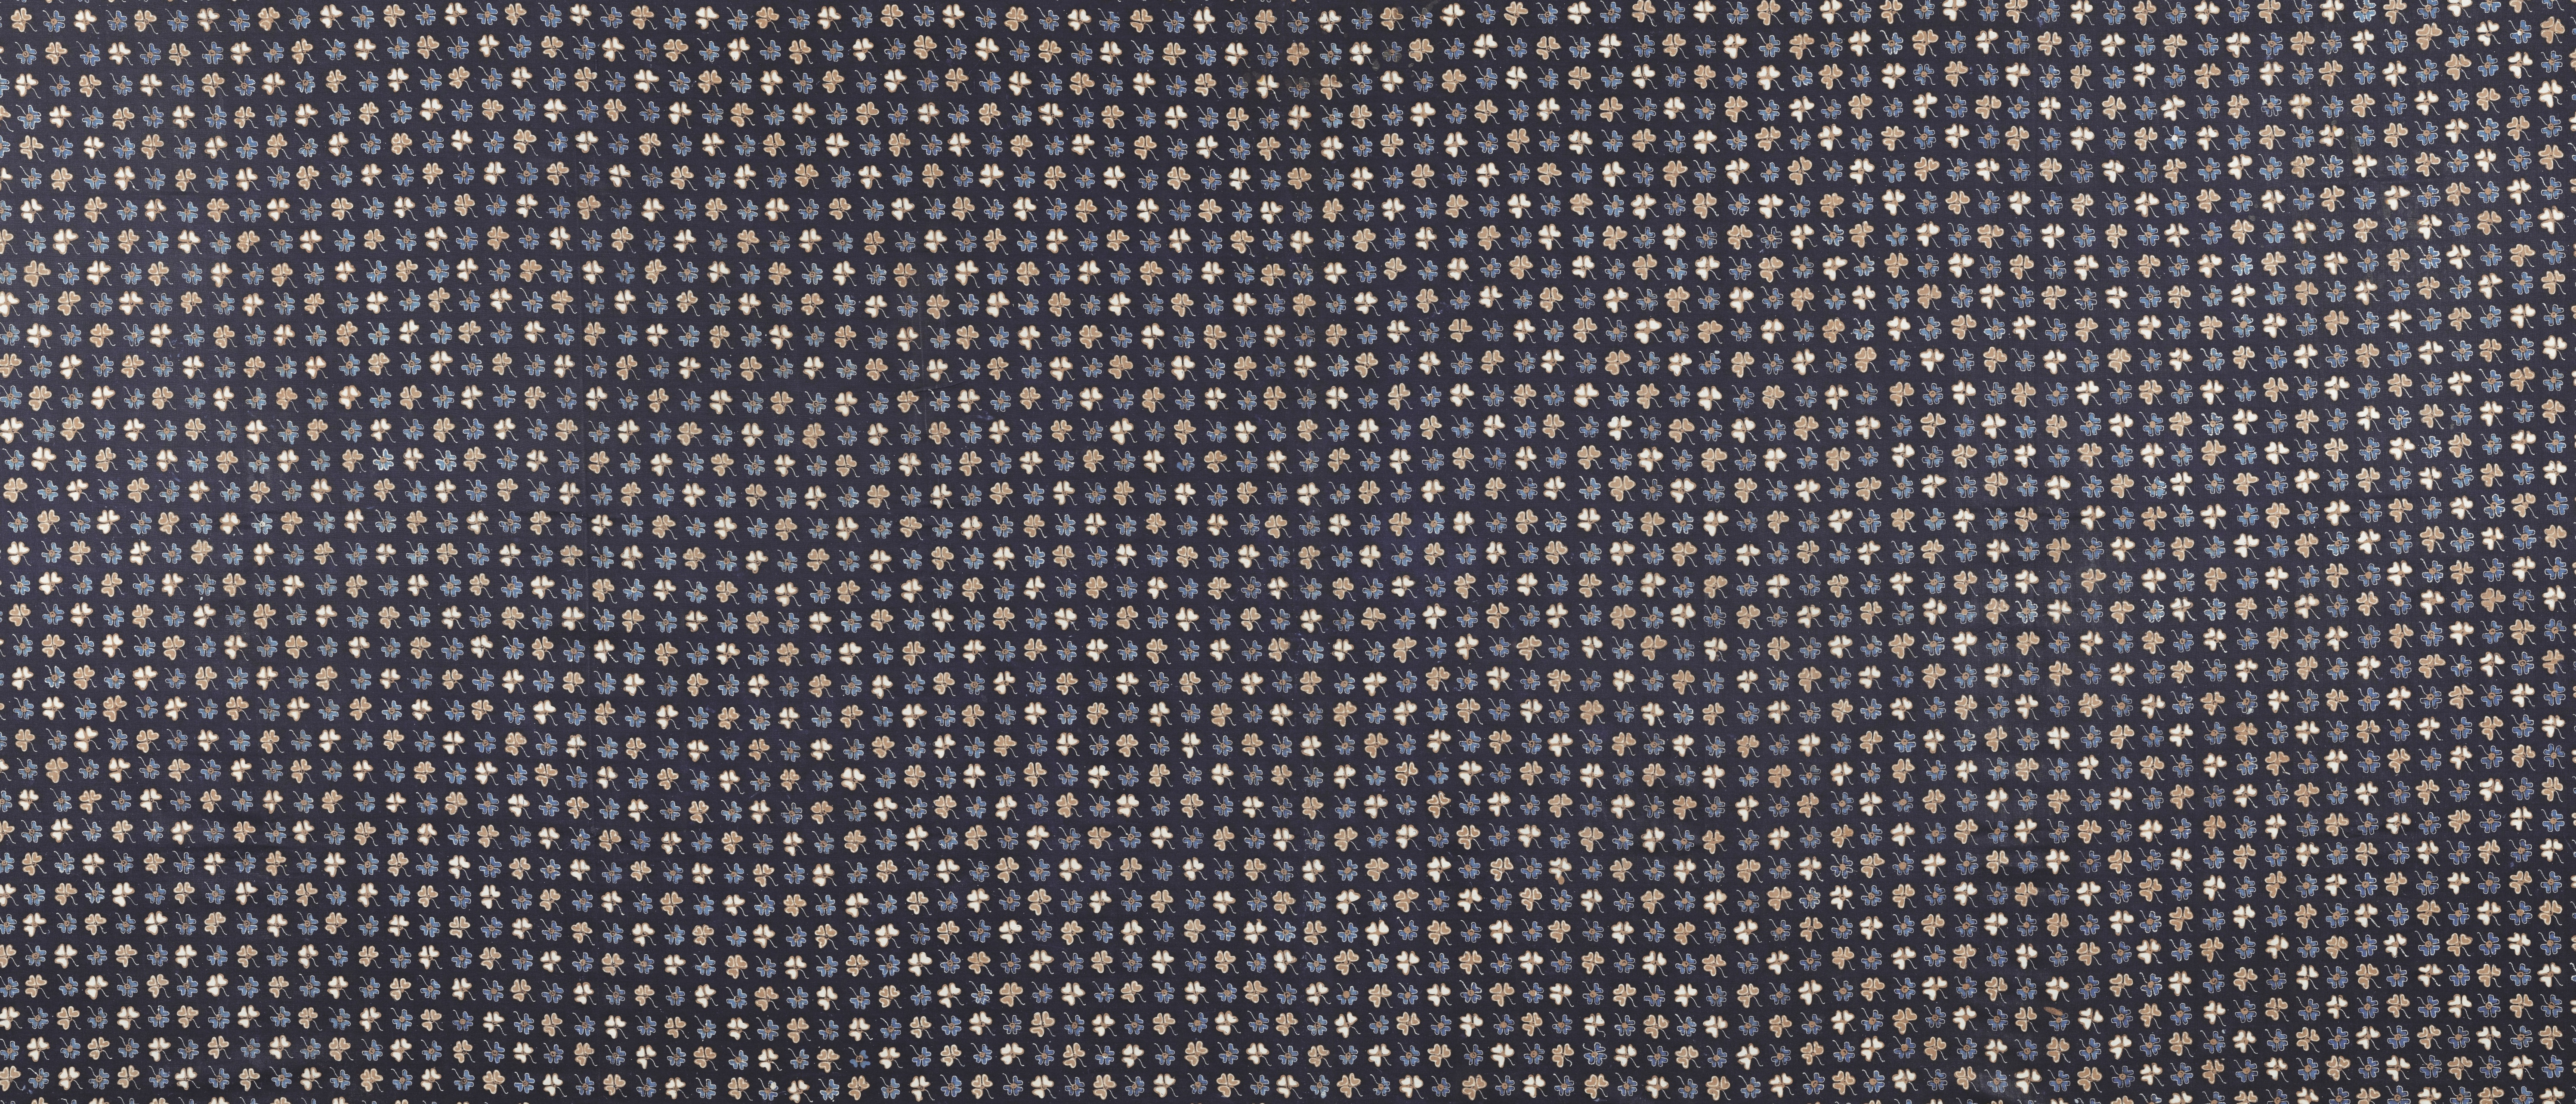 Ultra Wide Ultrawide Fabric Texture Pattern Symmetry 5986x2566